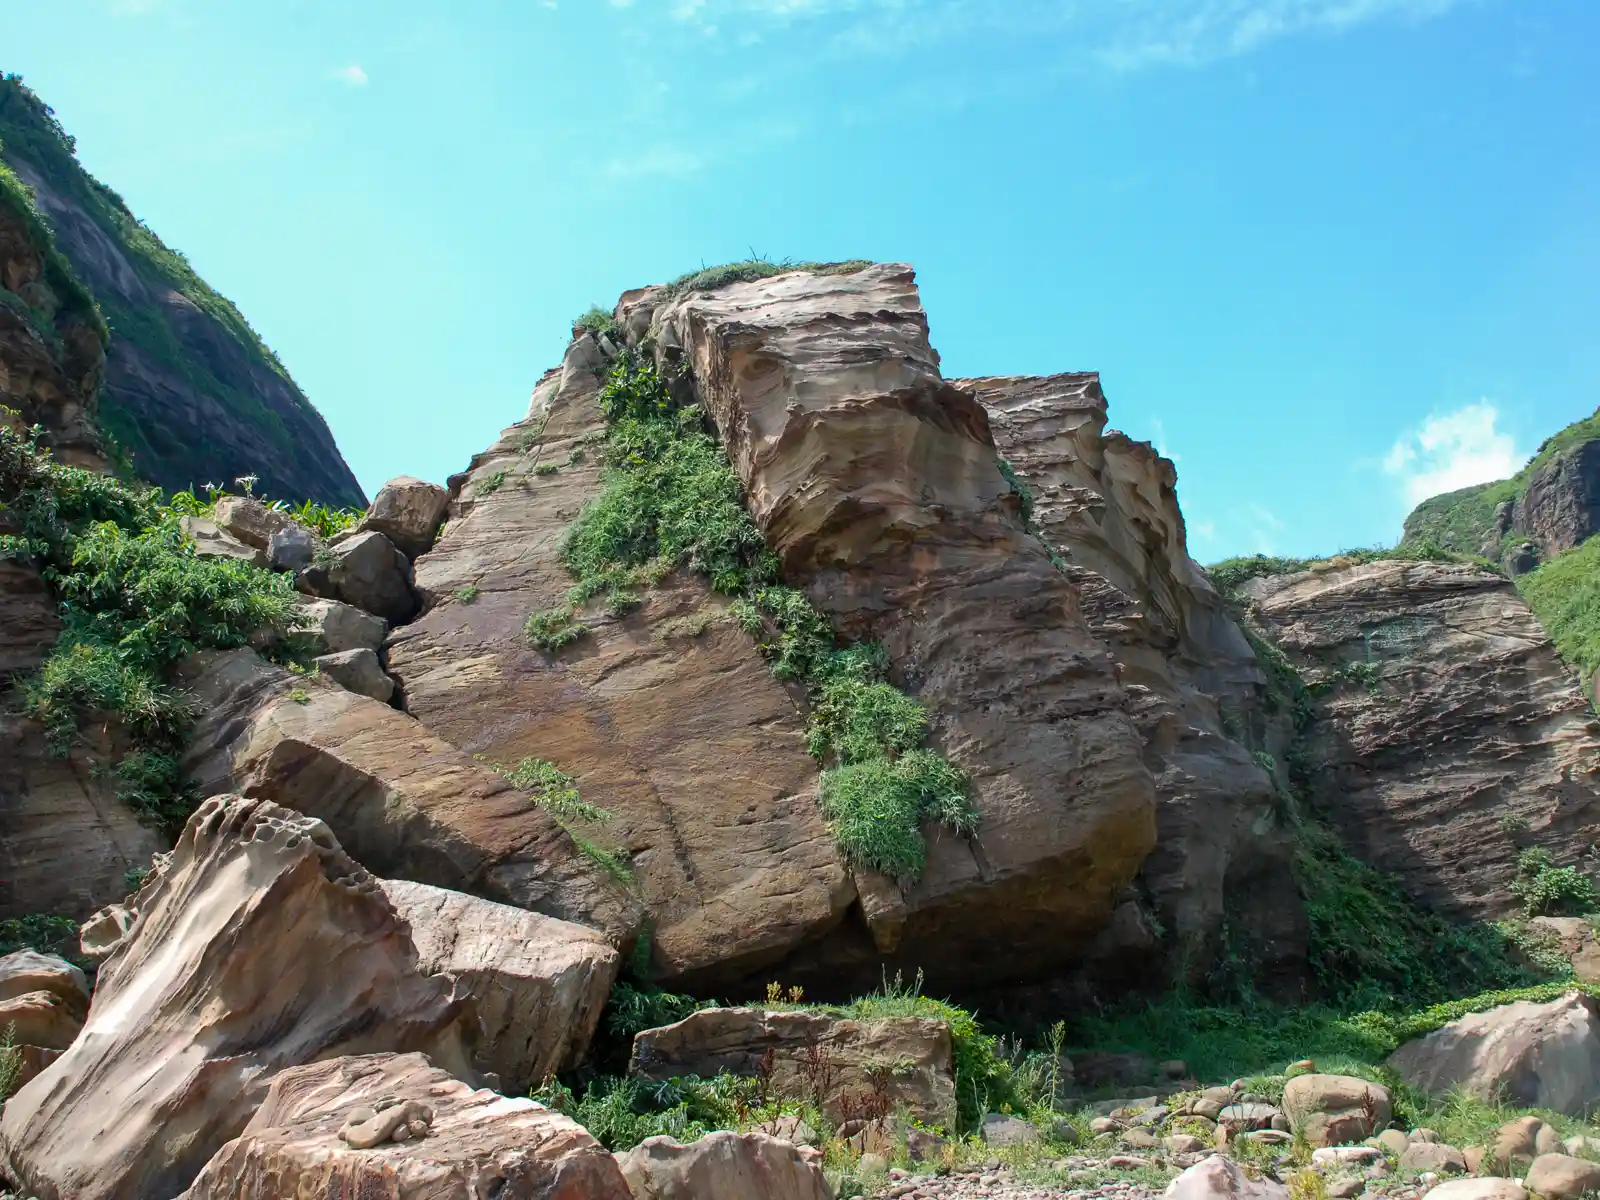 A boulder along the path to Nanya Rock.